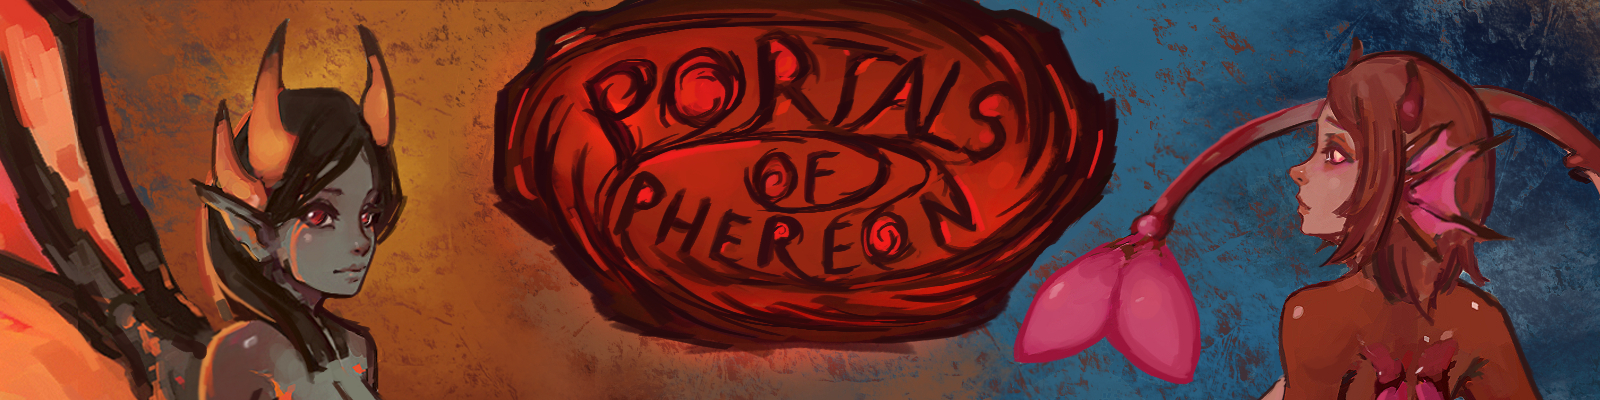 Portals of Pheroeon [v0.9.7.0] main image